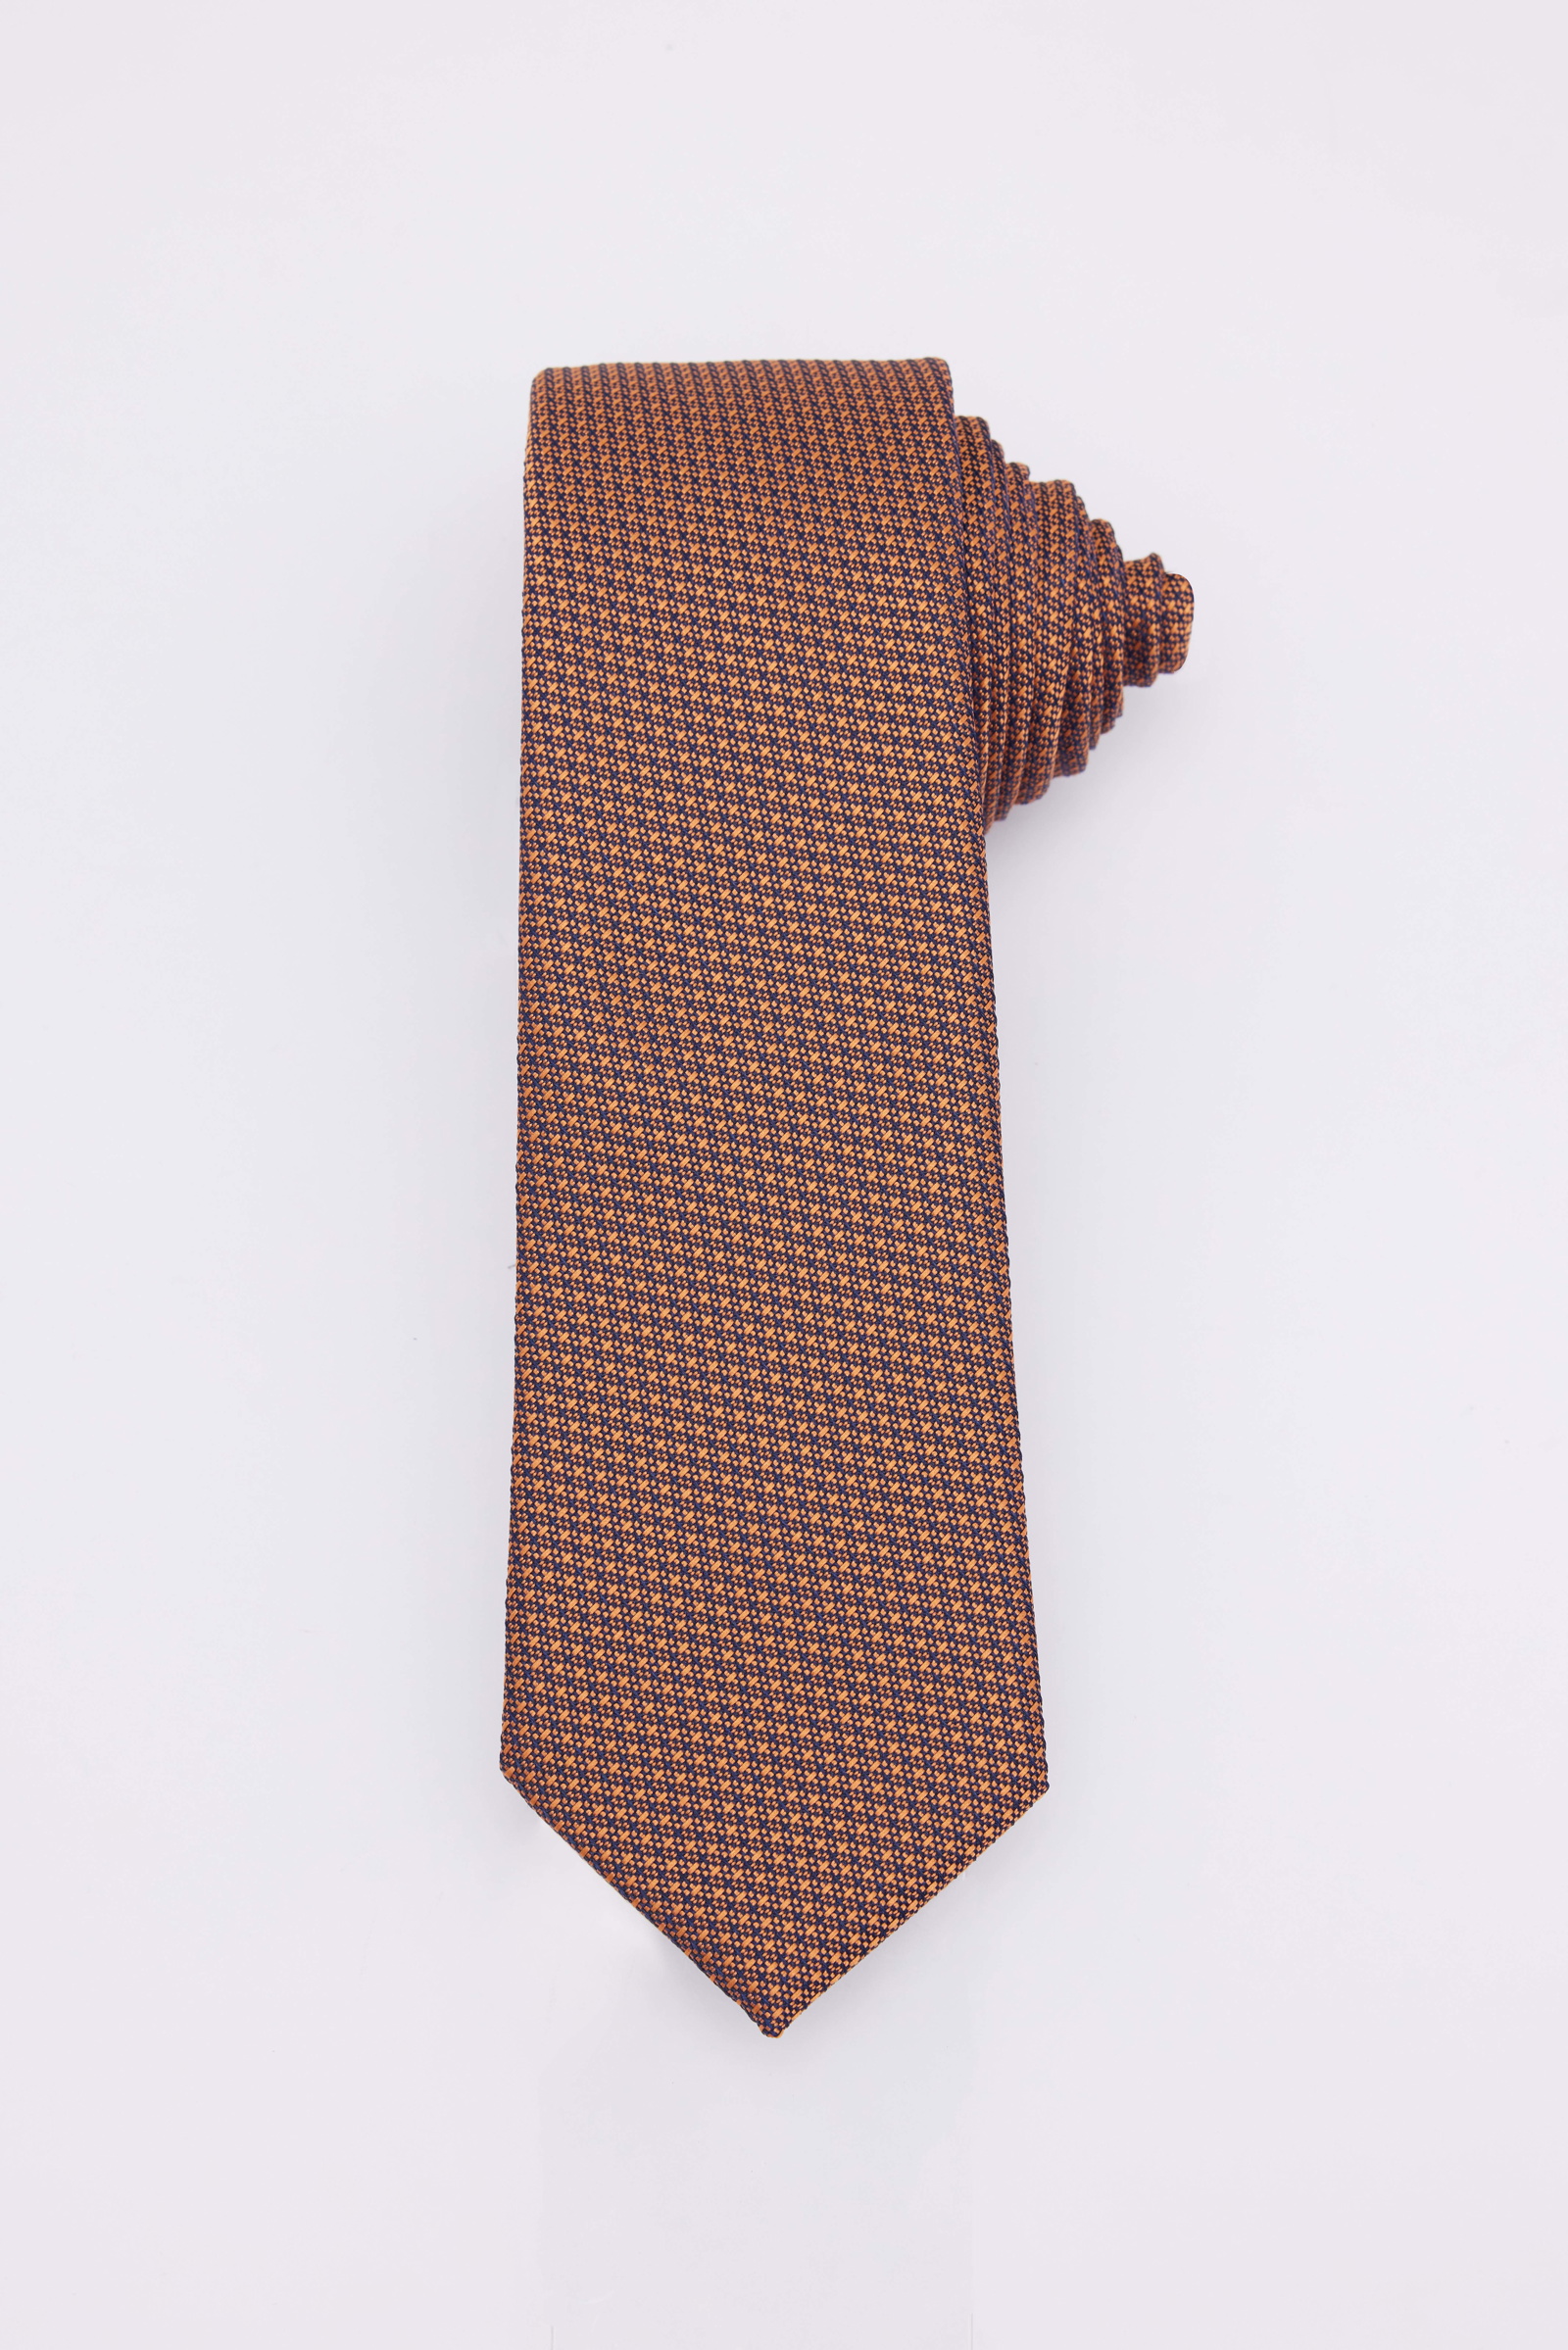  Brown Tie